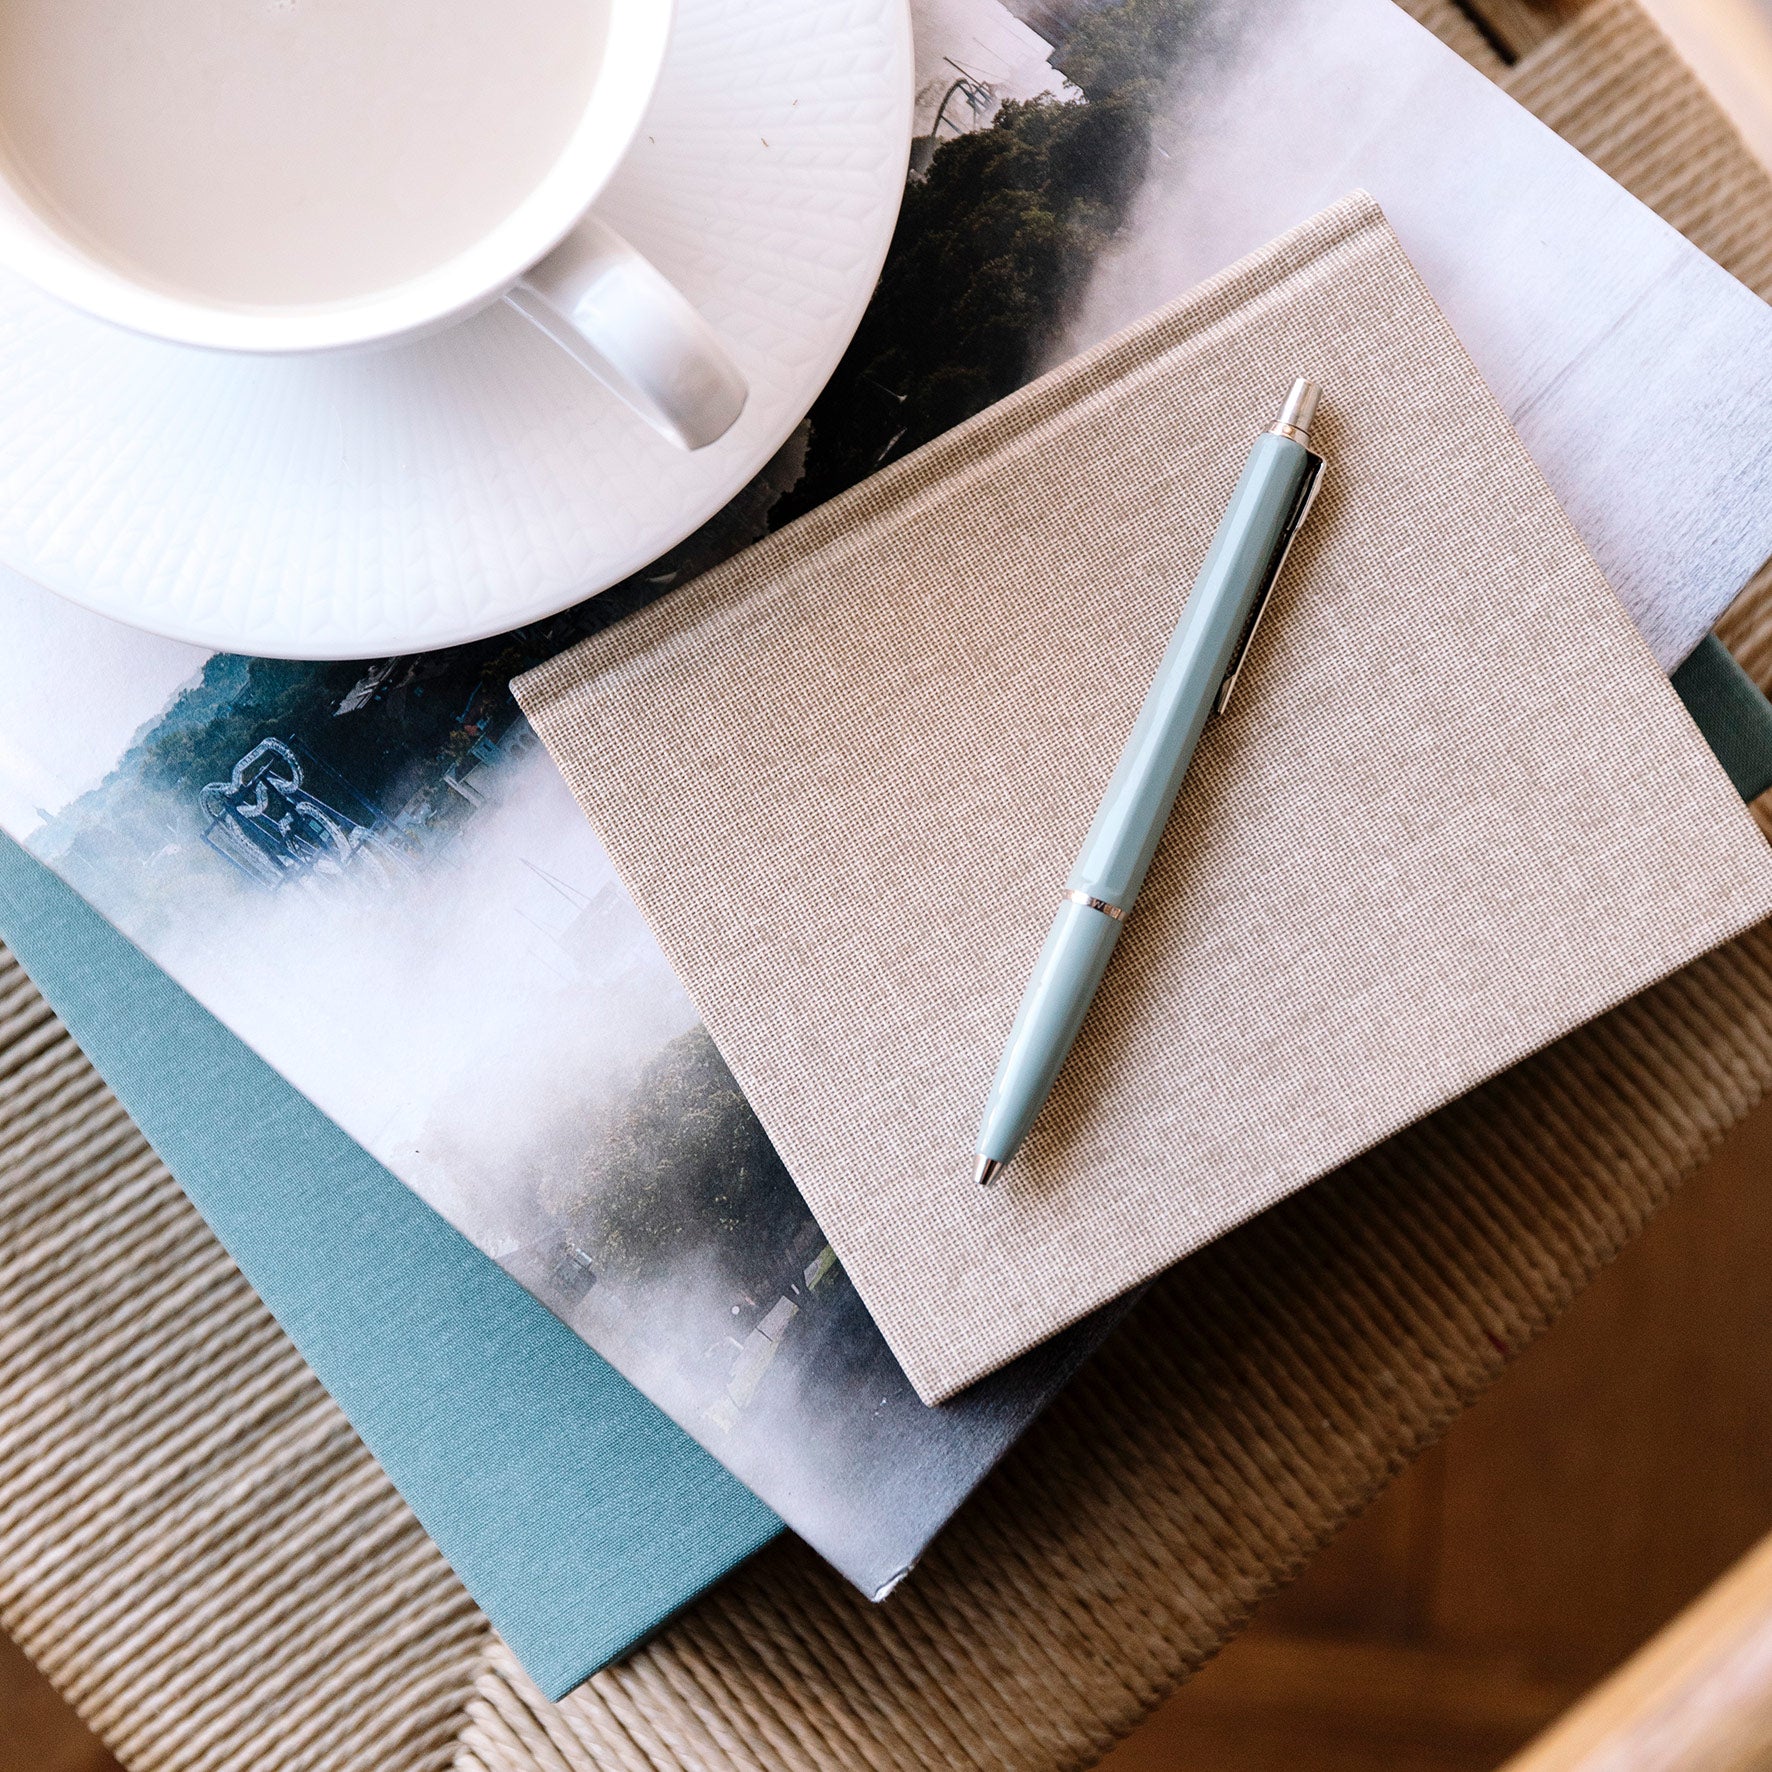 Bookbinders Design - Cloth Notebook - Large - Light Grey